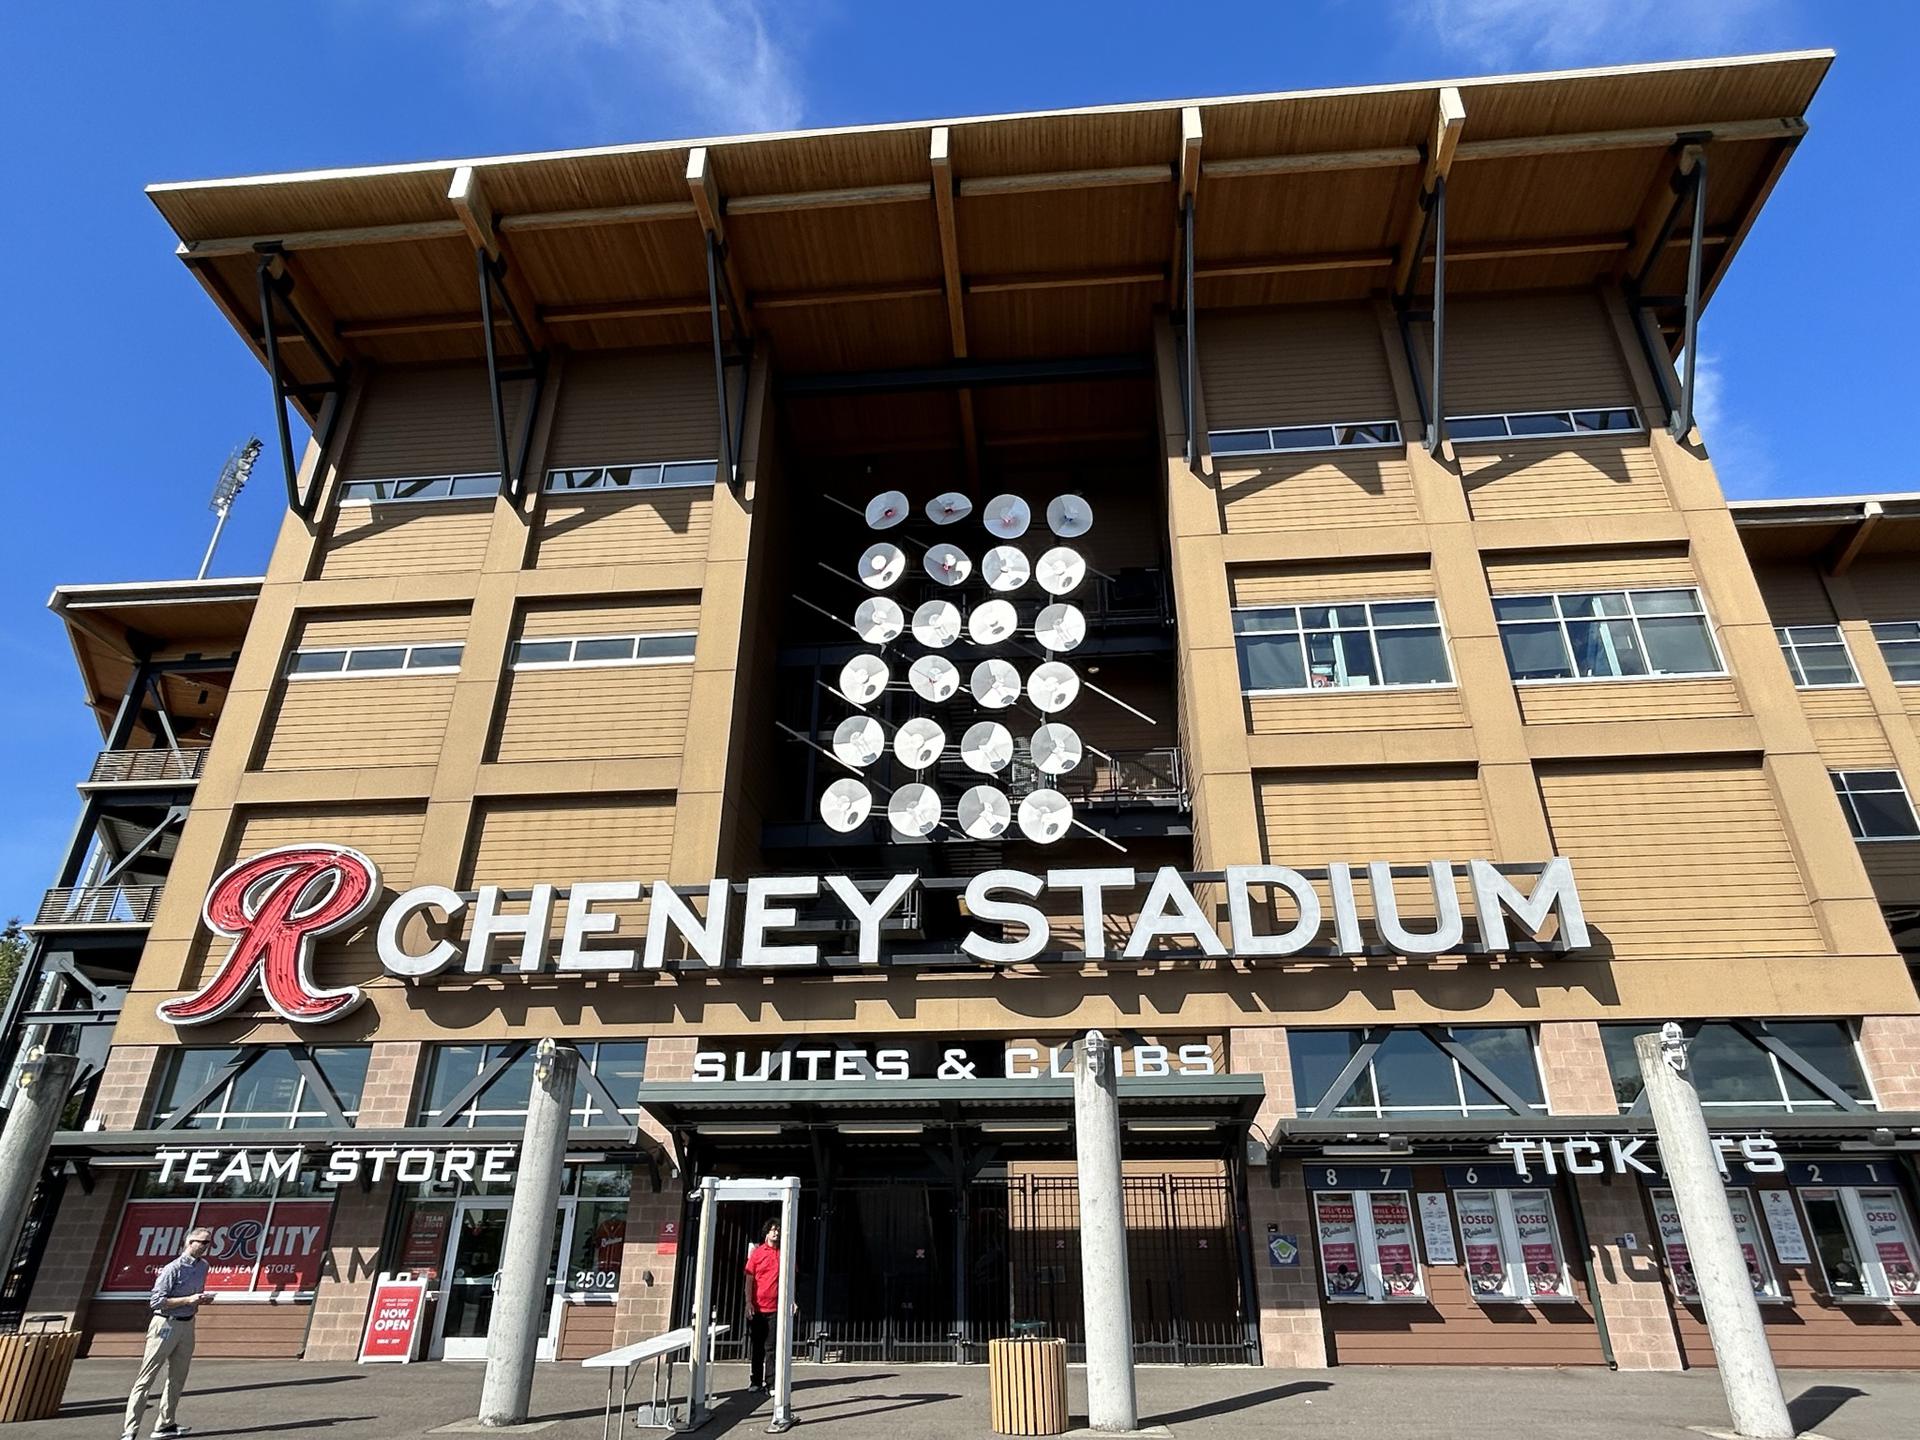 The Cheney Stadium exterior